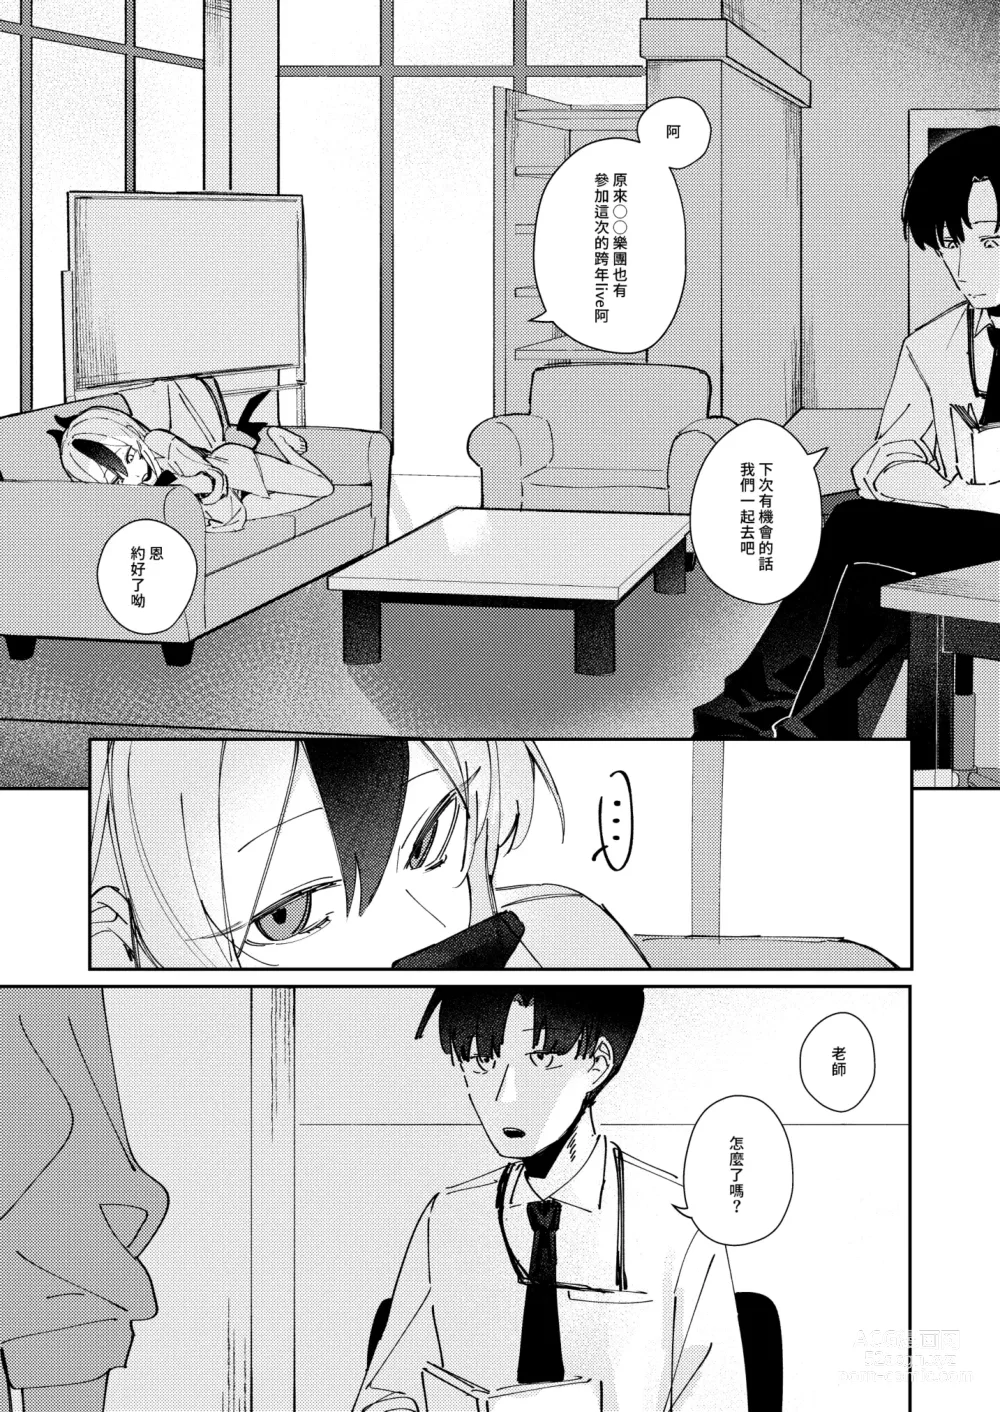 Page 9 of doujinshi 簡直就像戀人一樣